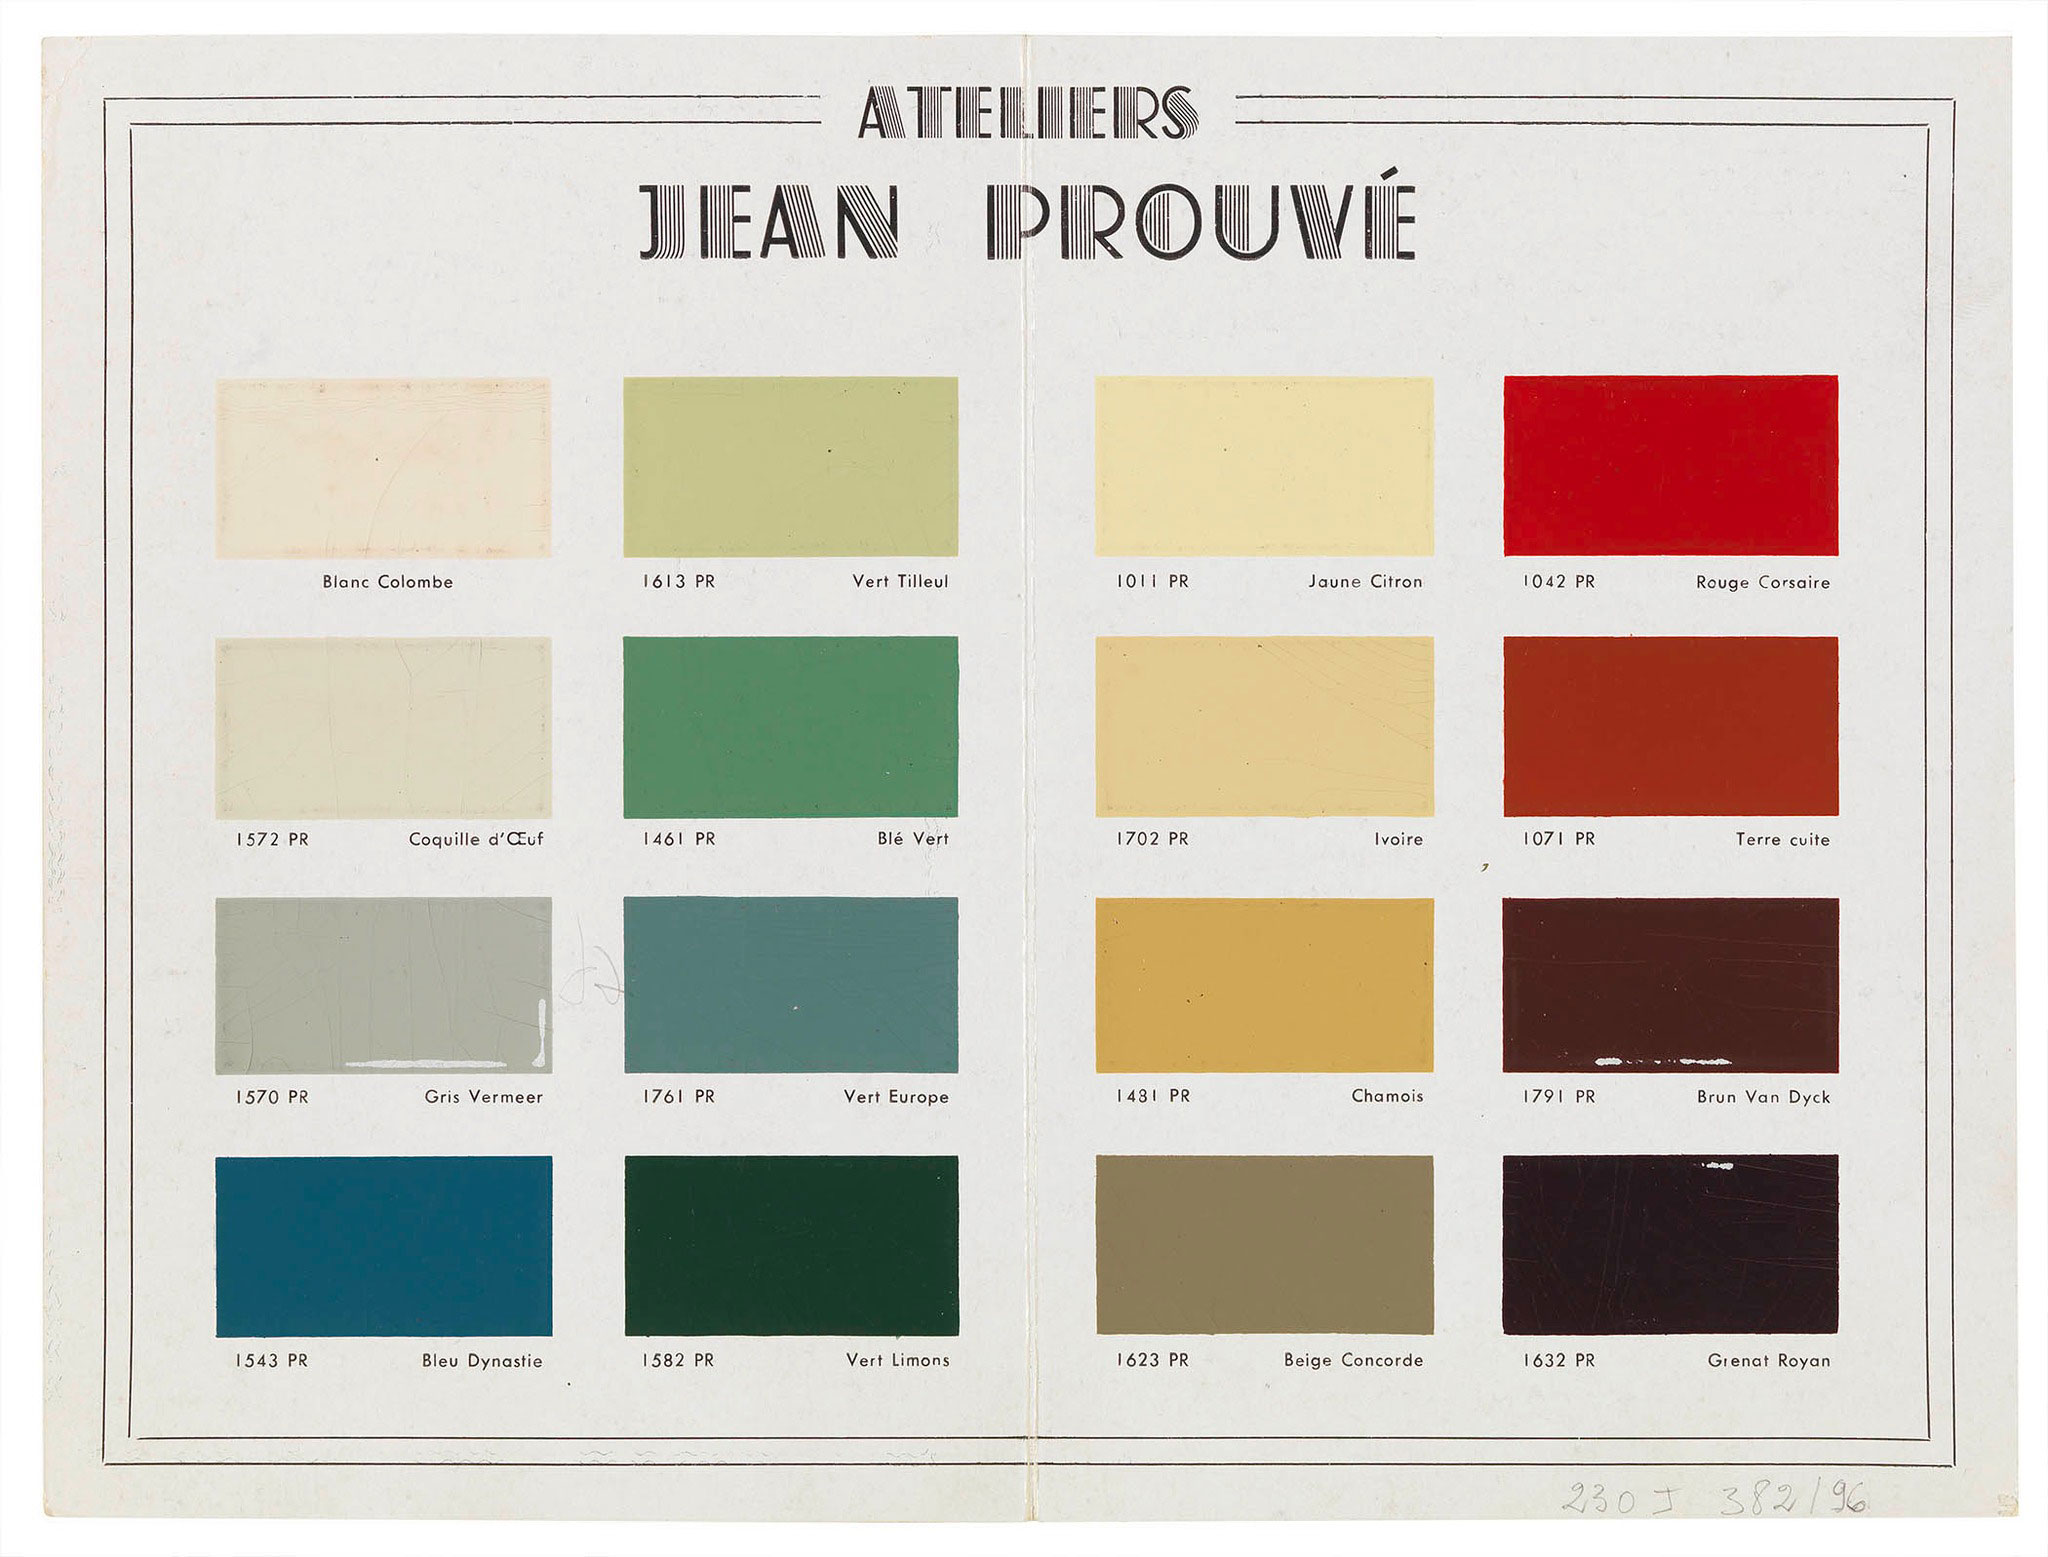 Jean Prouvé追求揭露物件、材料和結構的真實本質。他並不贊同使用清漆，對於不會腐蝕的鋁，他選擇不加以處理，絕不會在木頭紋理上塗漆。Jean Prouve認為，材料的性質決定了物件的美學。對於易於腐蝕的鋼材，他創造了自己的色票來處理